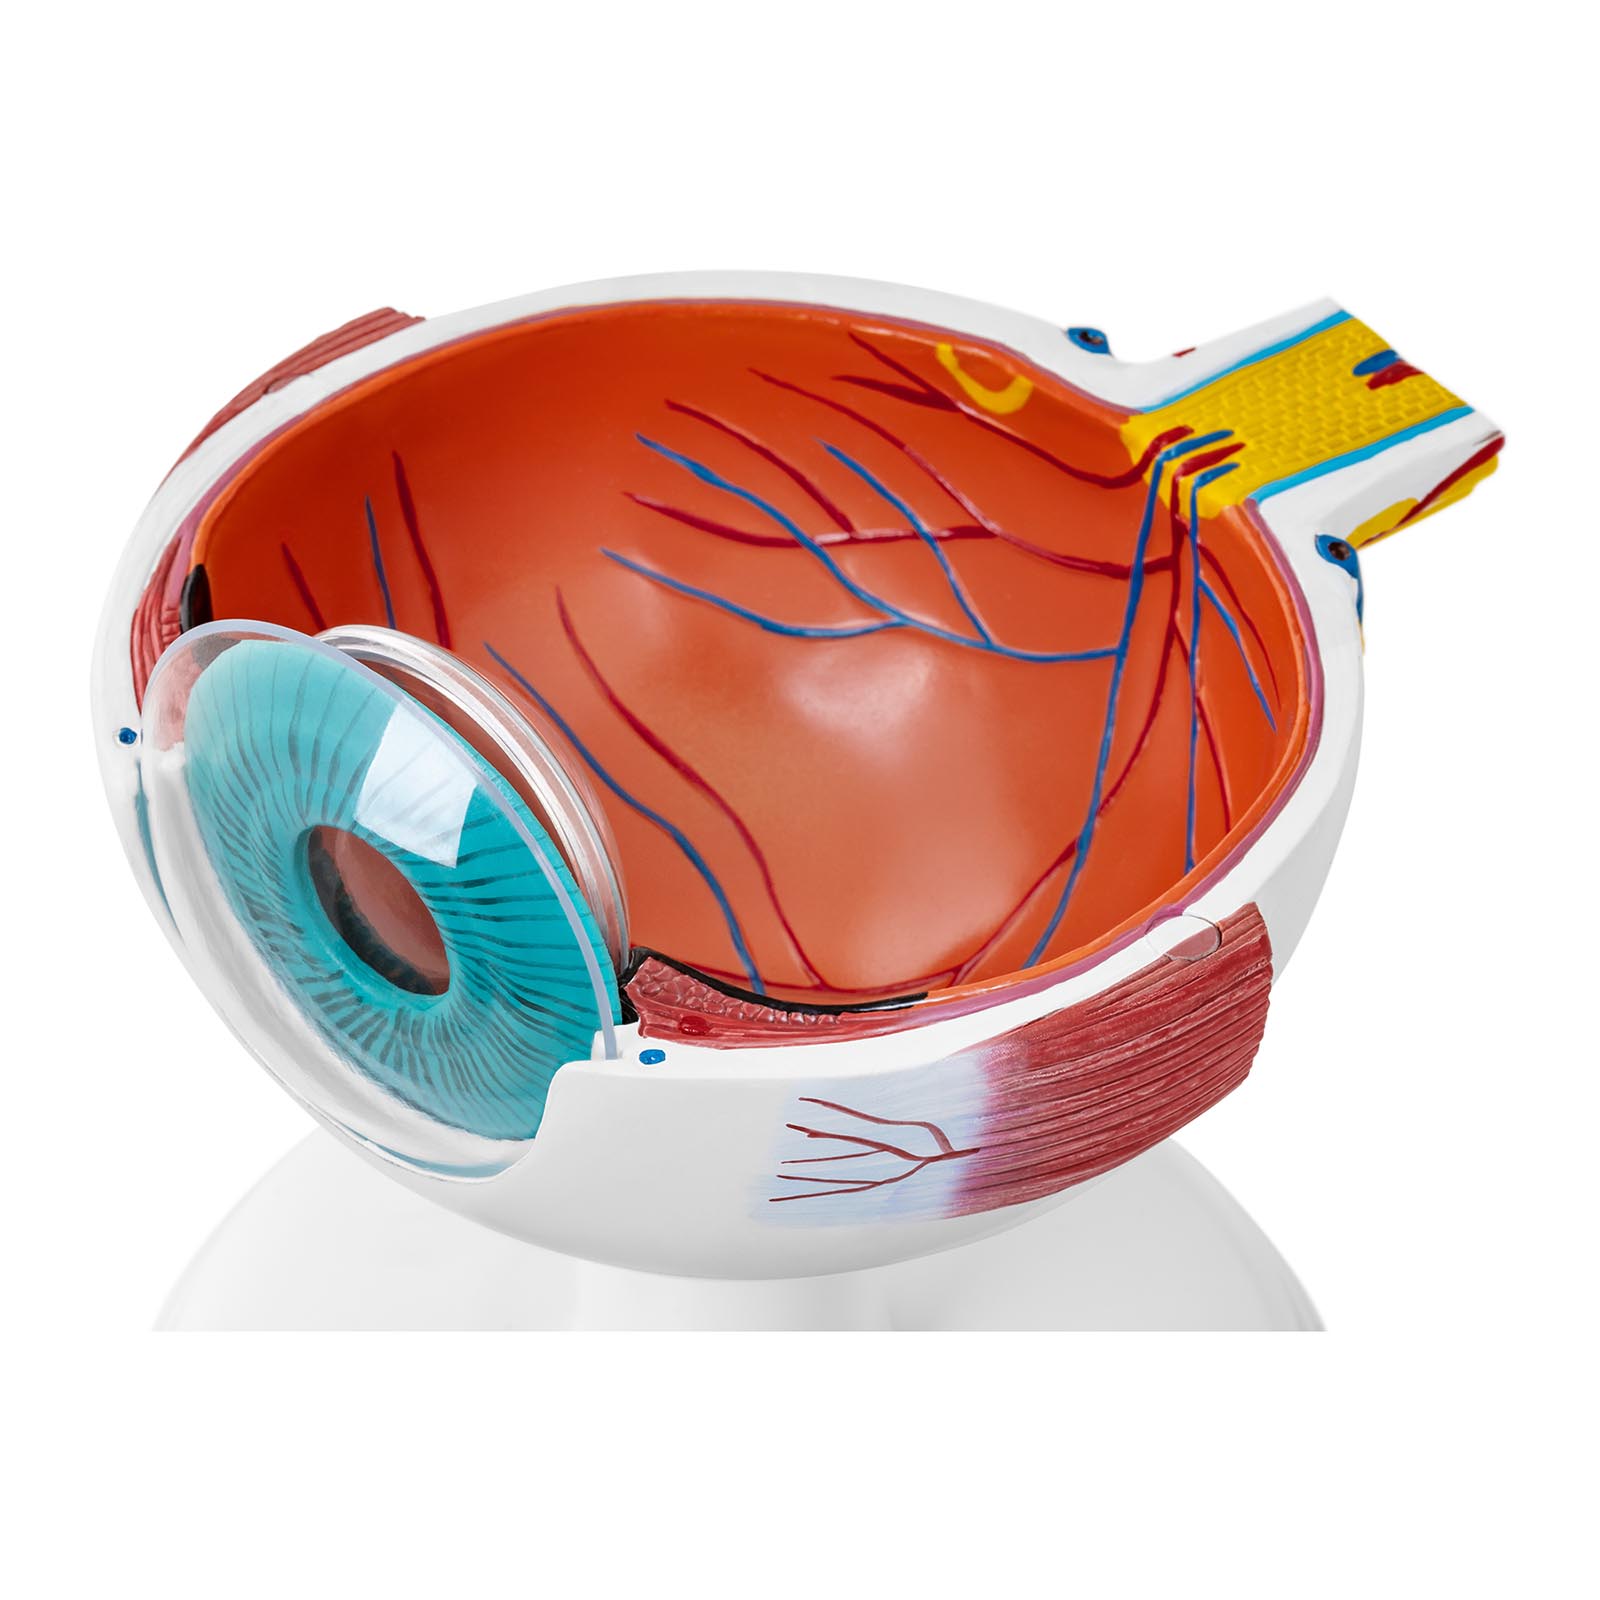 Modelo anatómico de ojo - 6:1